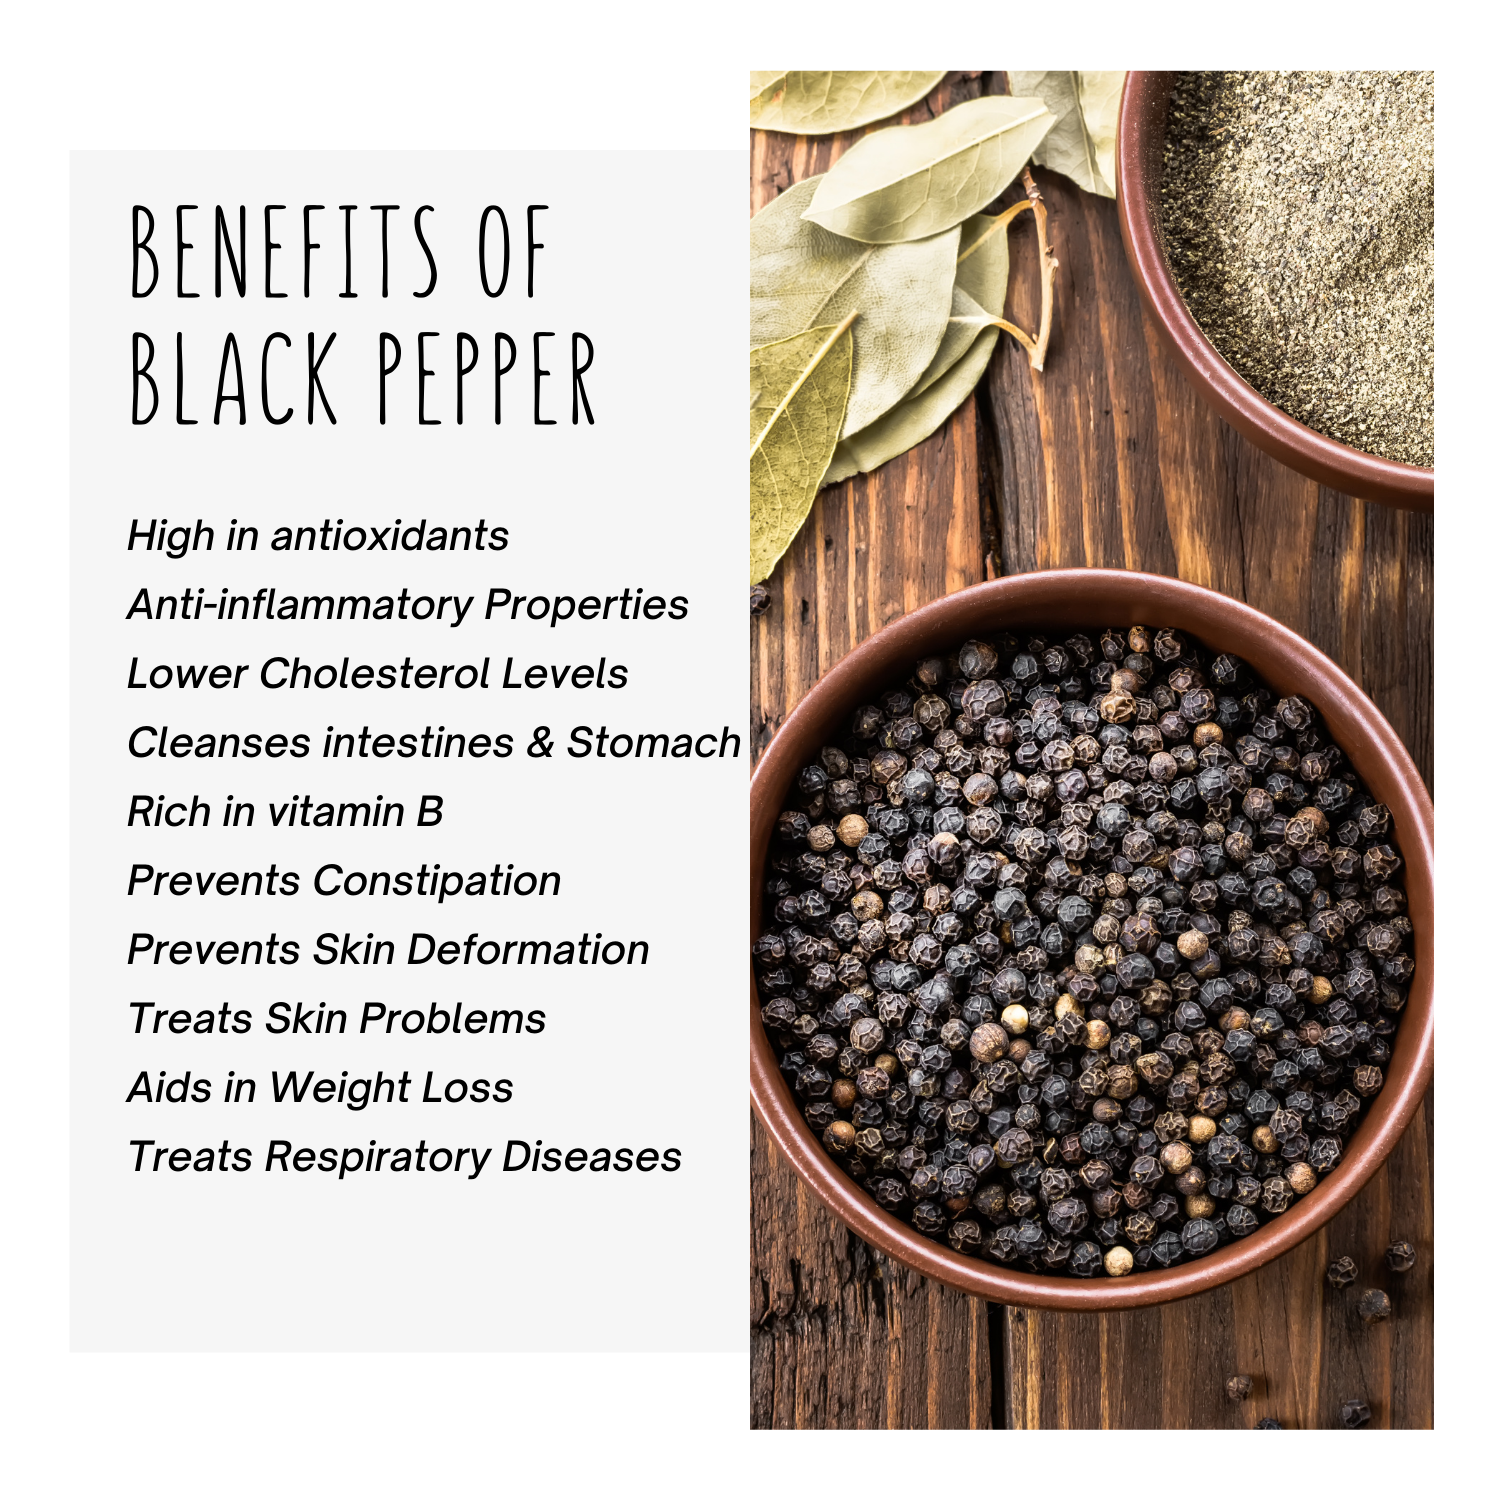 Benefits of Black Pepper